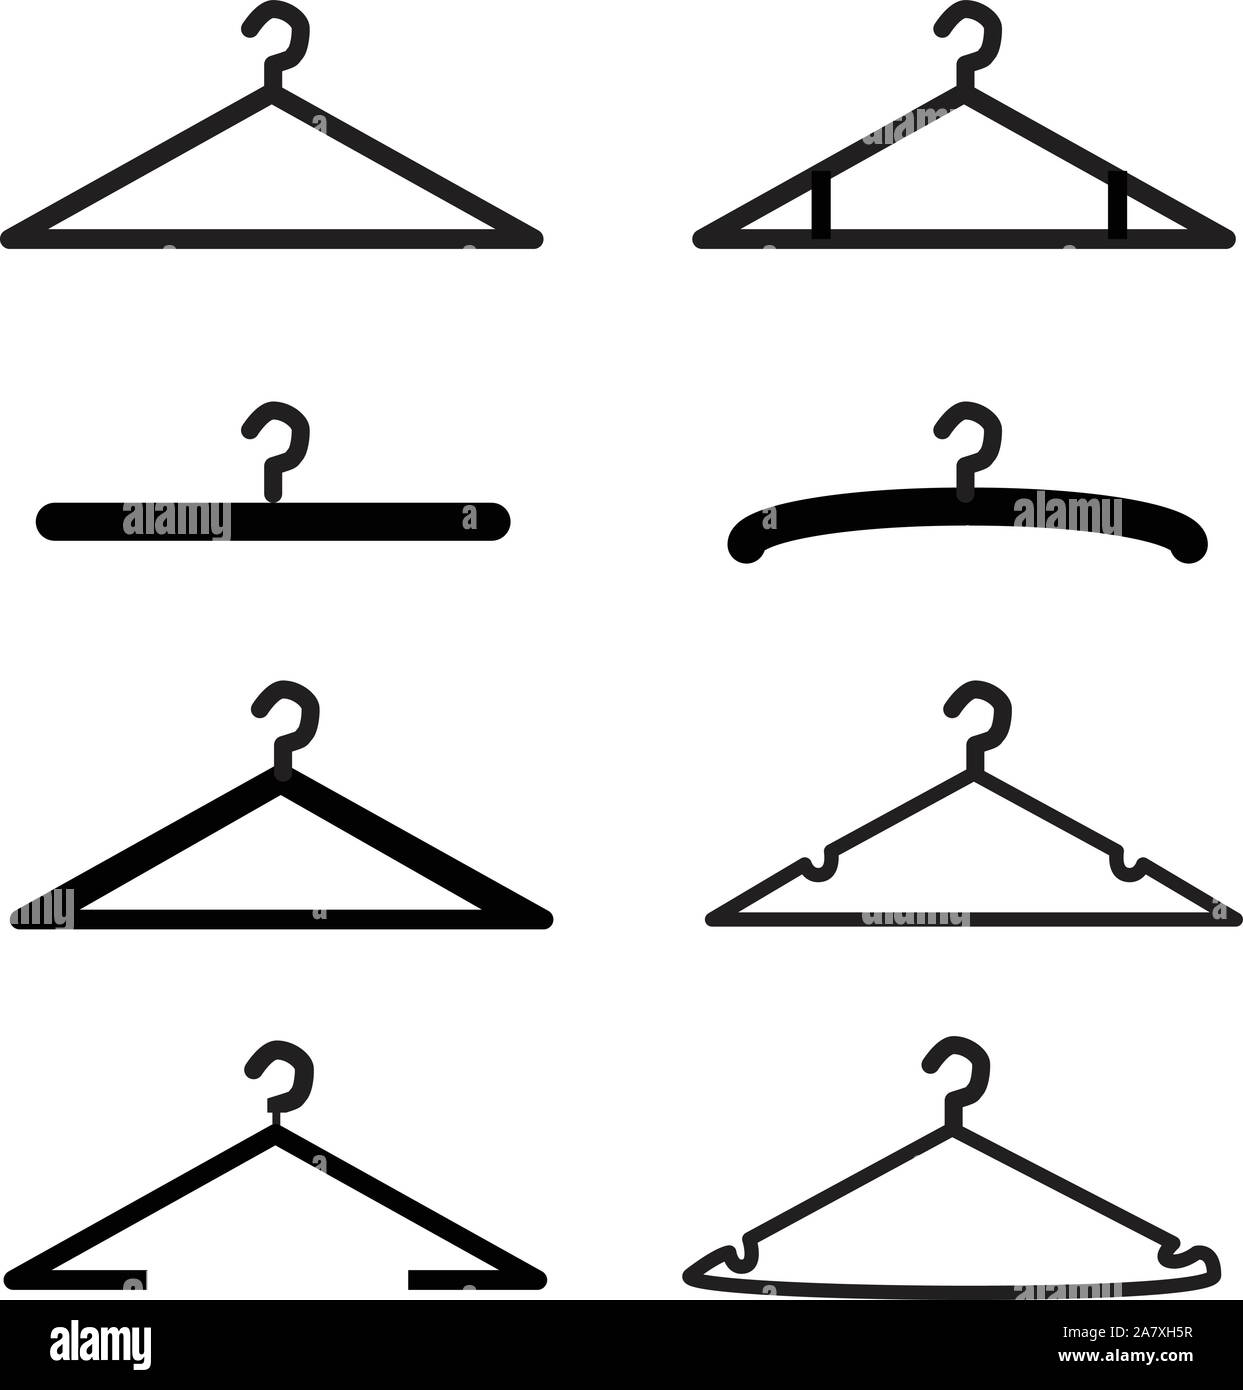 hanger icon on white background. flat style. hanger icon for your web site design, logo, app, UI. hanger symbol. Stock Vector